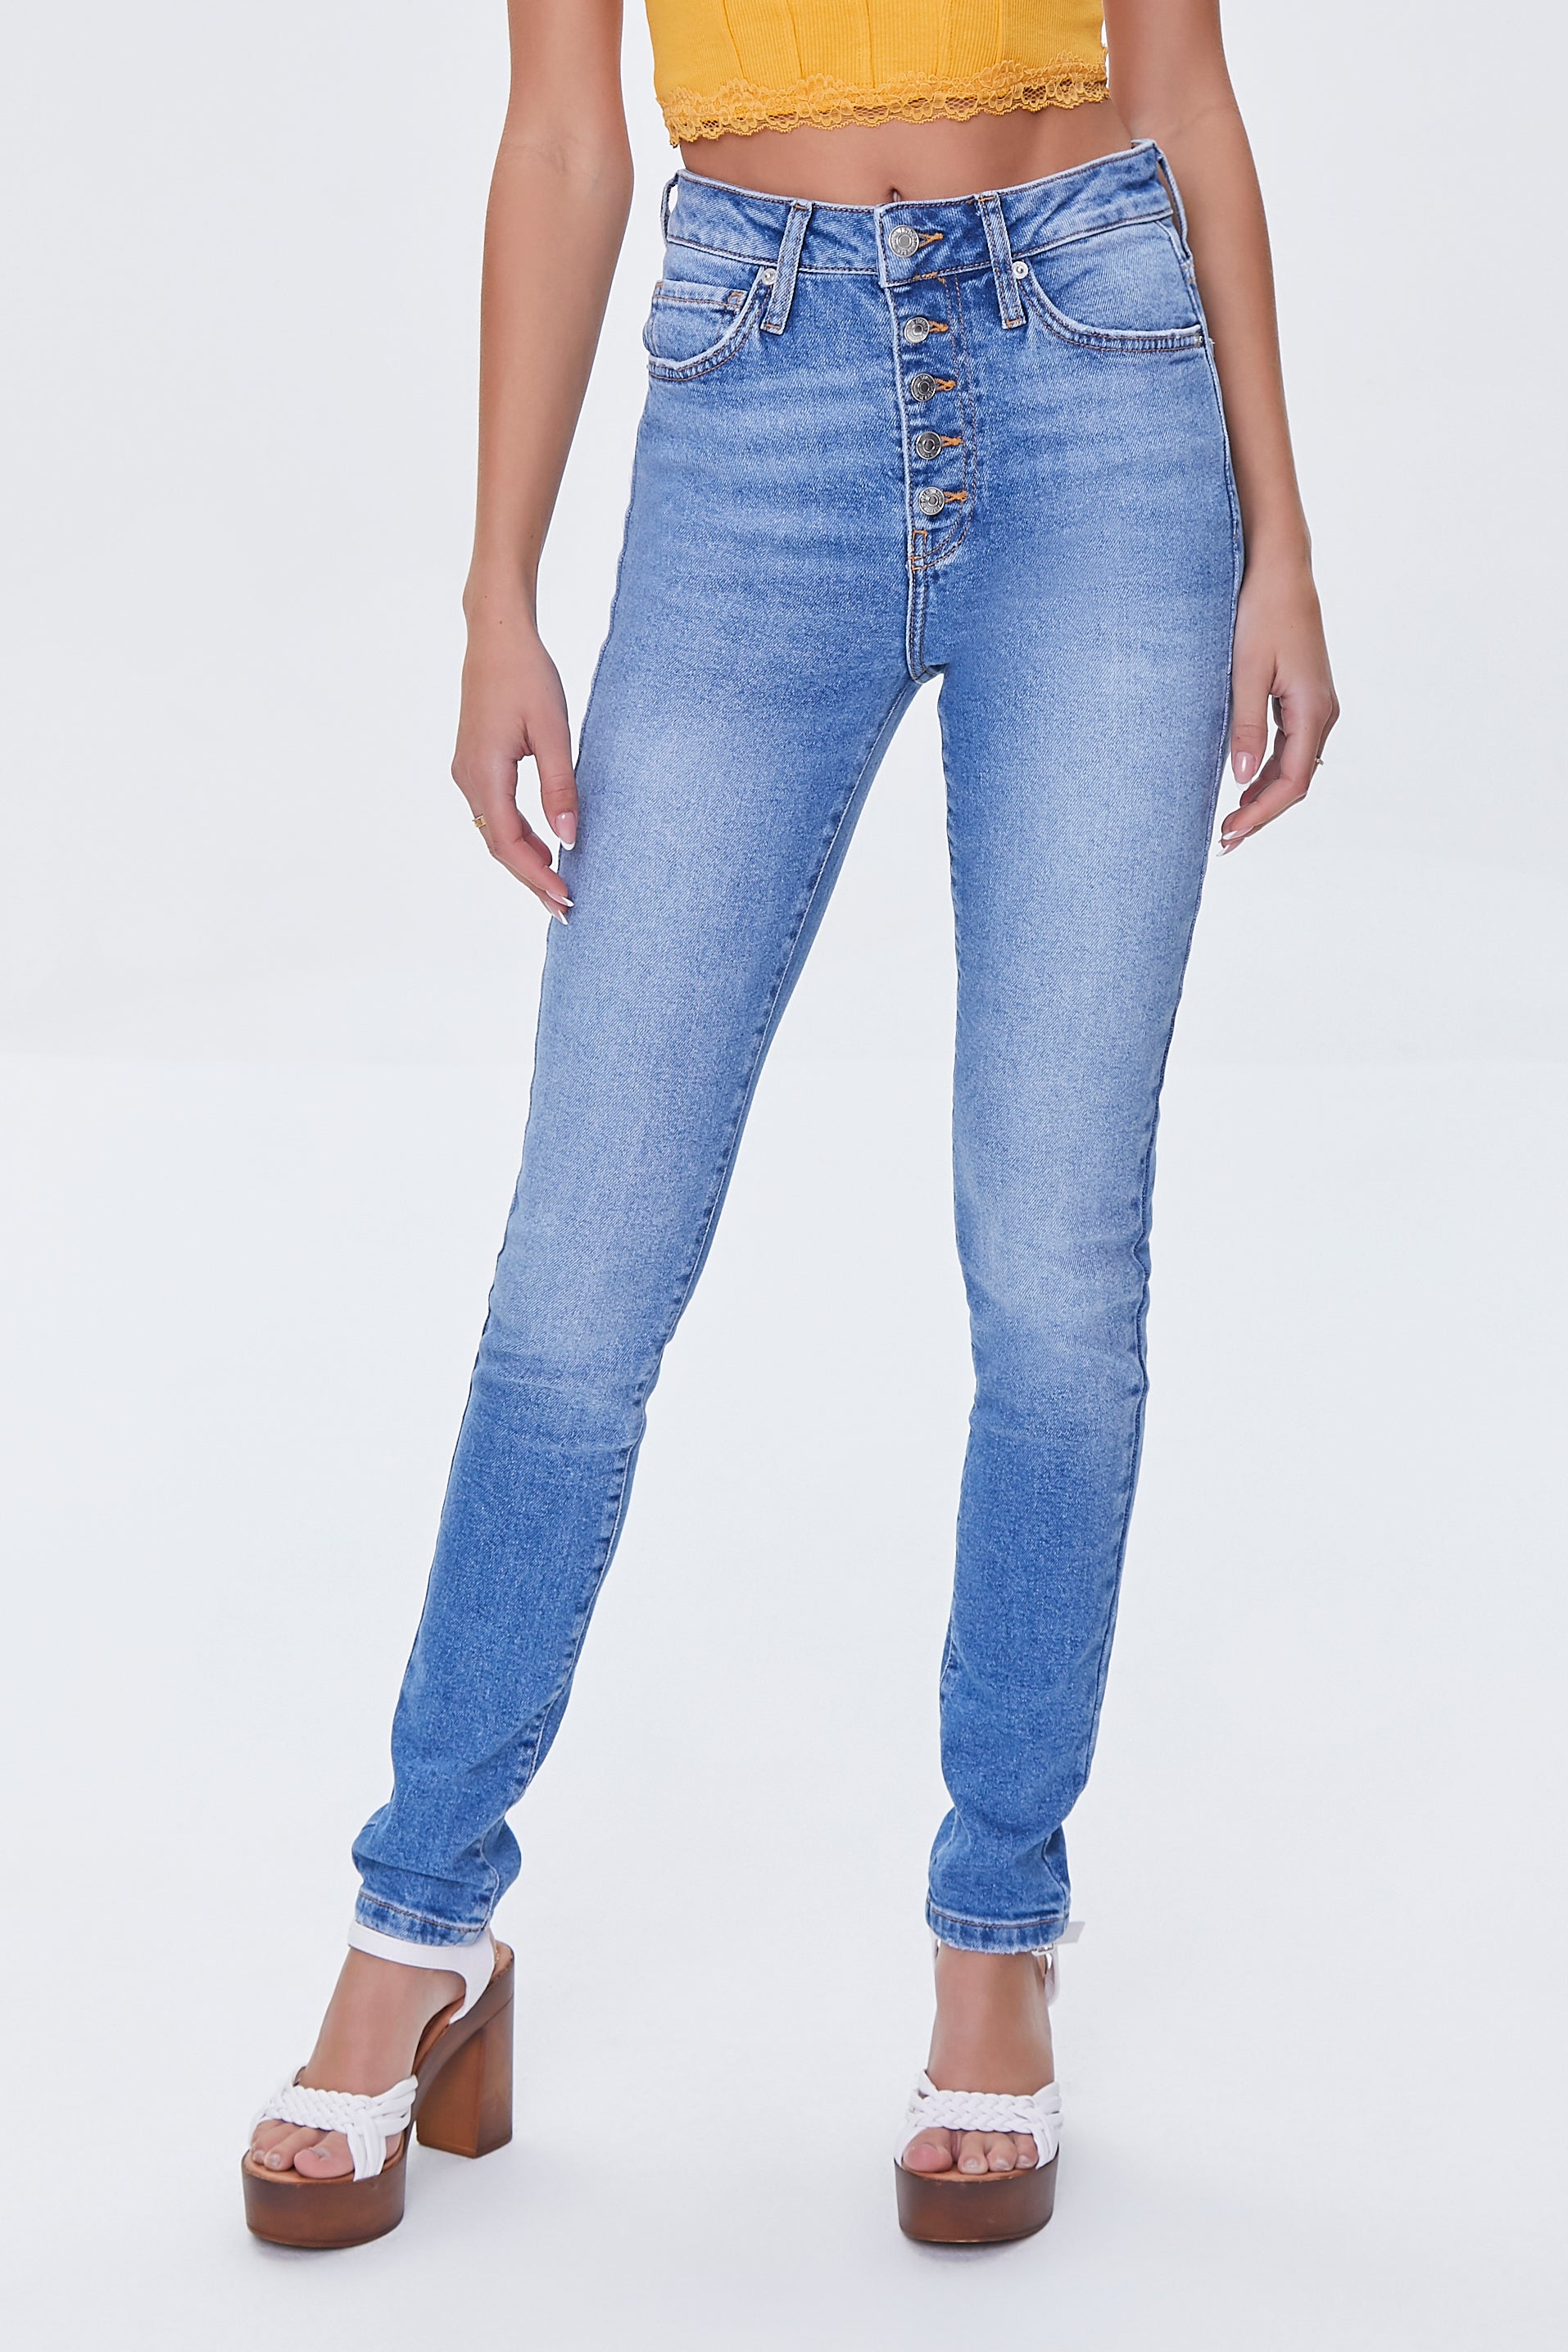 Mediumdenim Skinny High-Rise Long Jeans 1